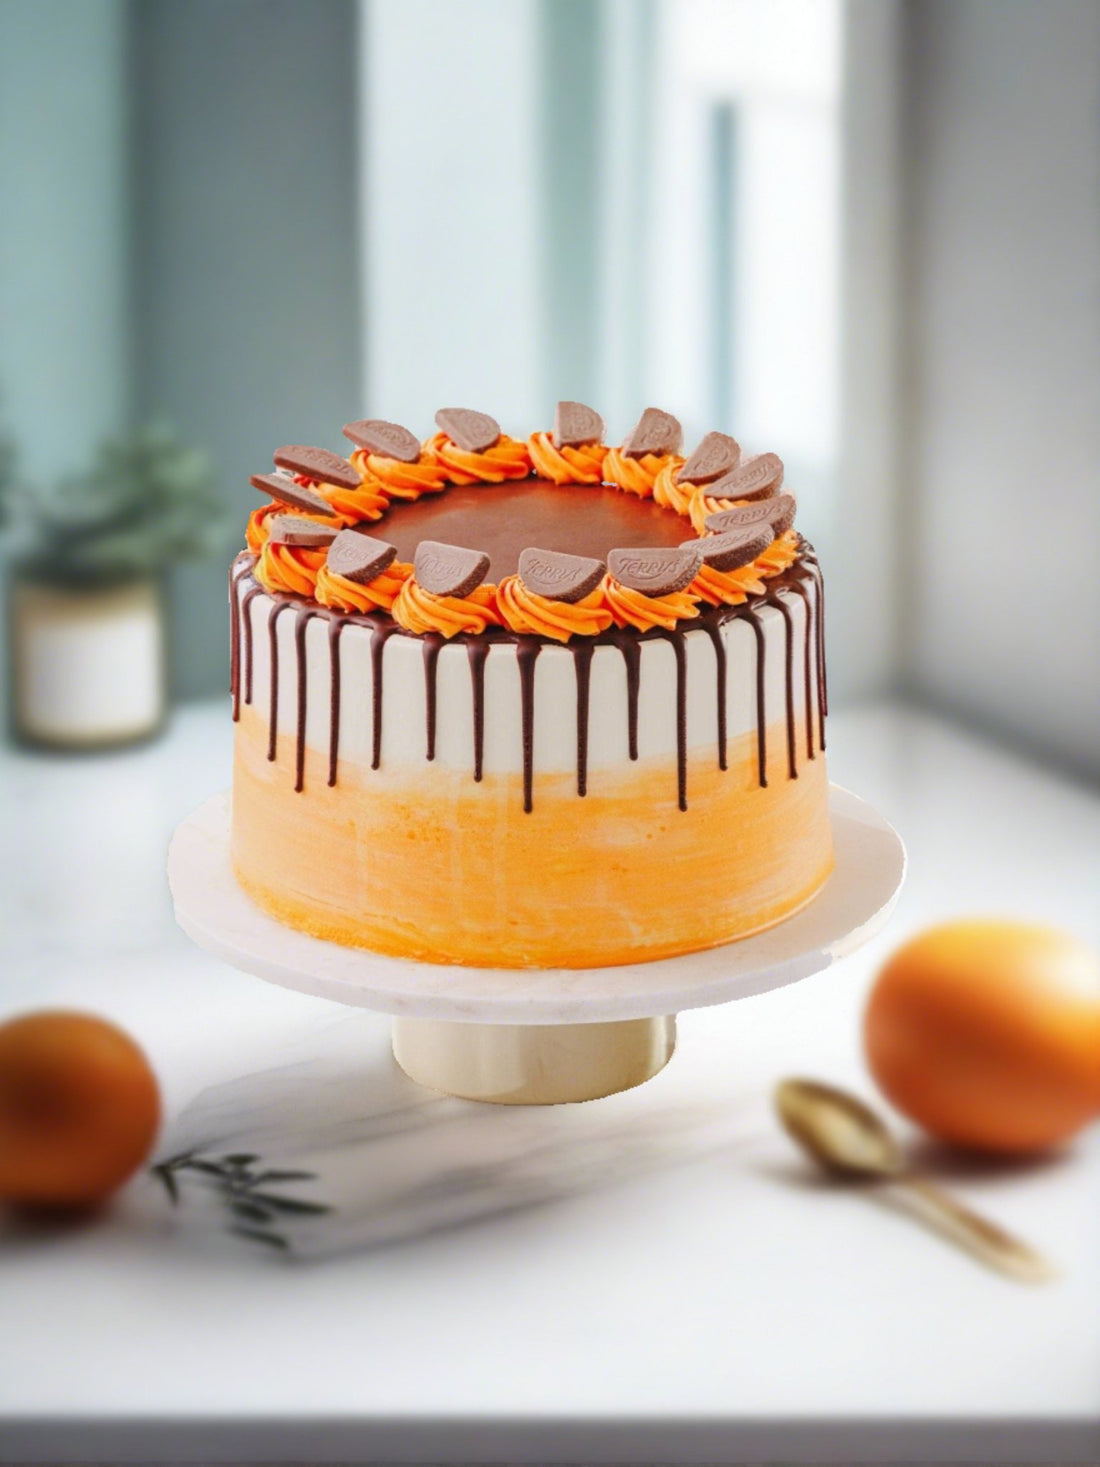 Make it a Chocolate Birthday Cake - Patisserie Valerie